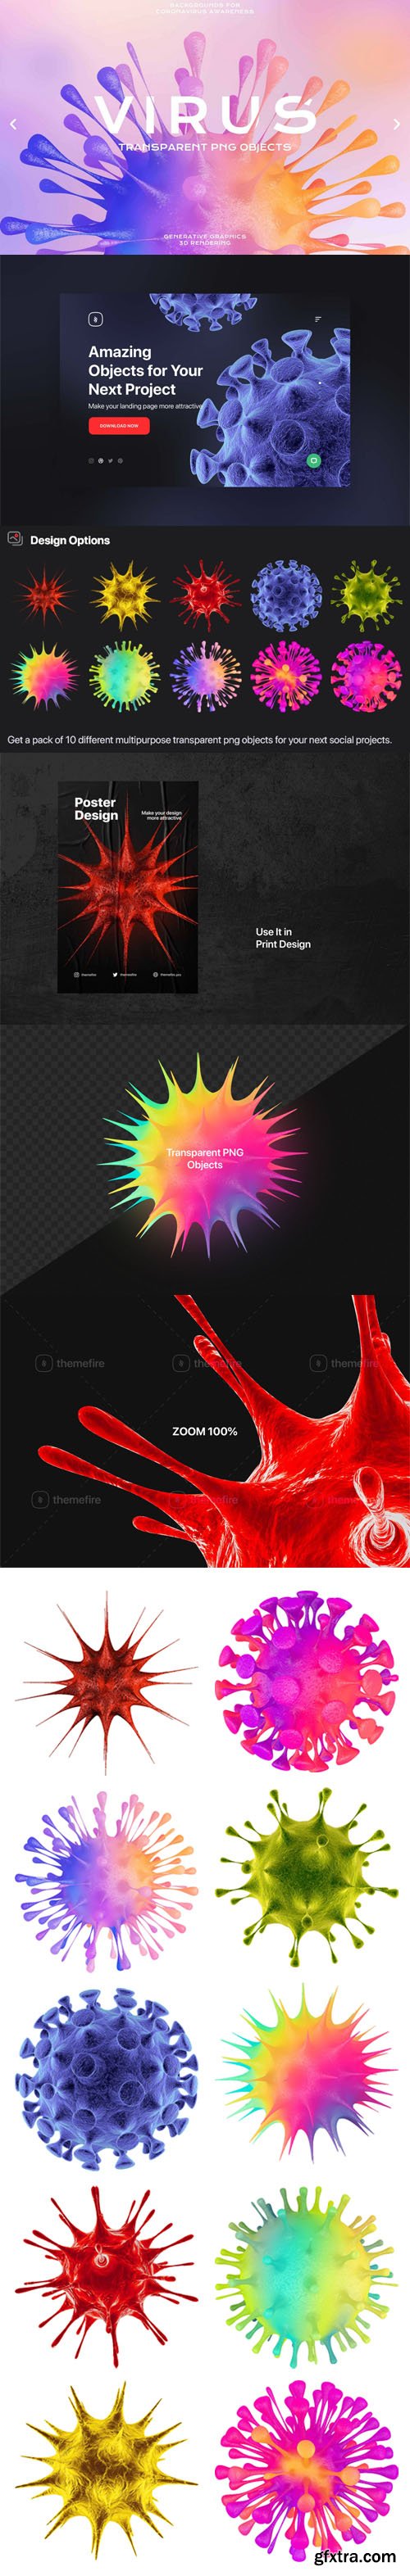 3D Virus Illustrations - Transparent PNG Objects